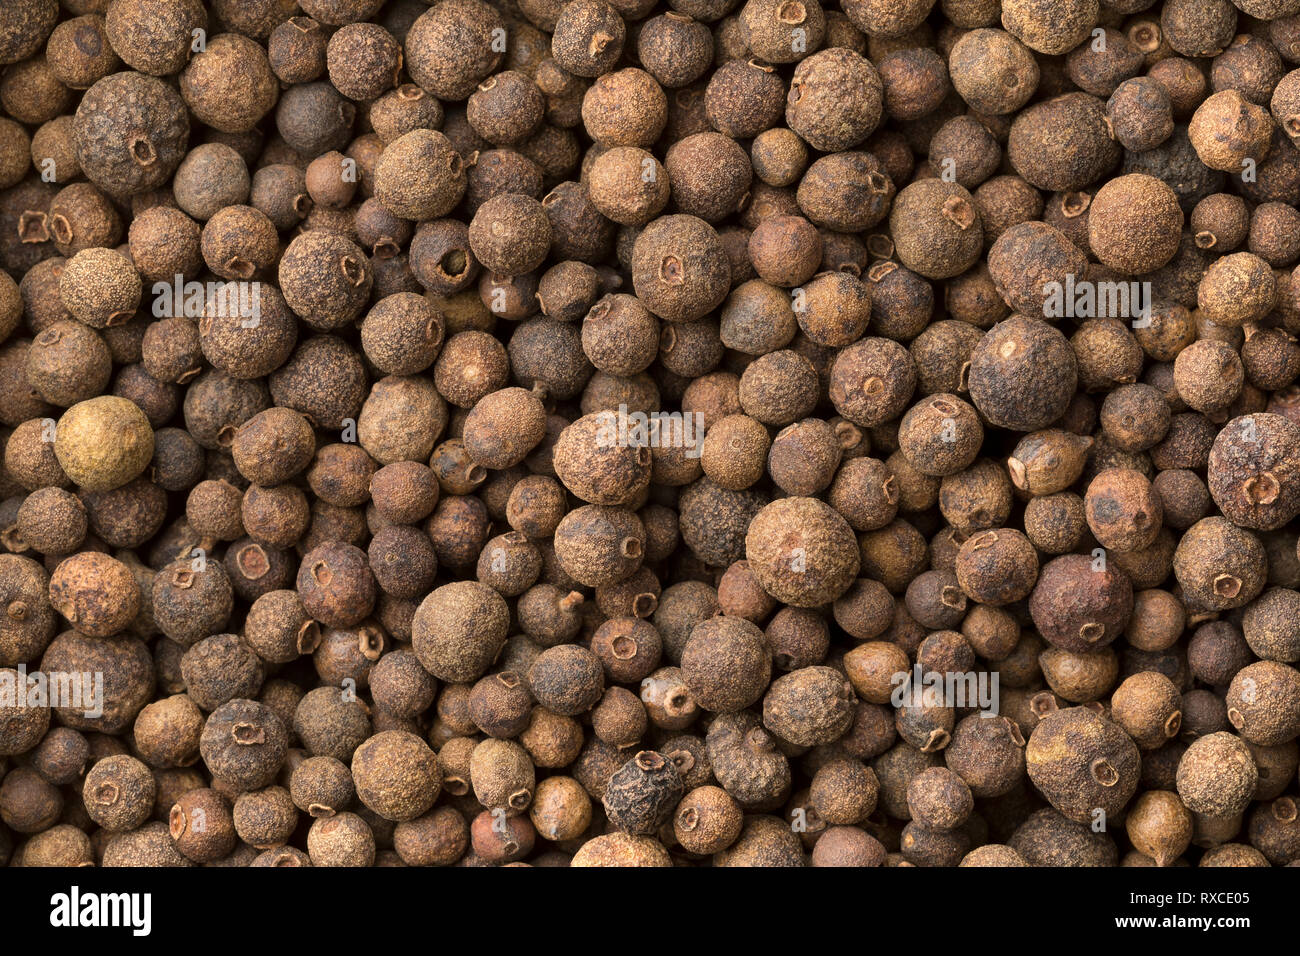 Allspice, dried unripe fruit, full frame close up Stock Photo